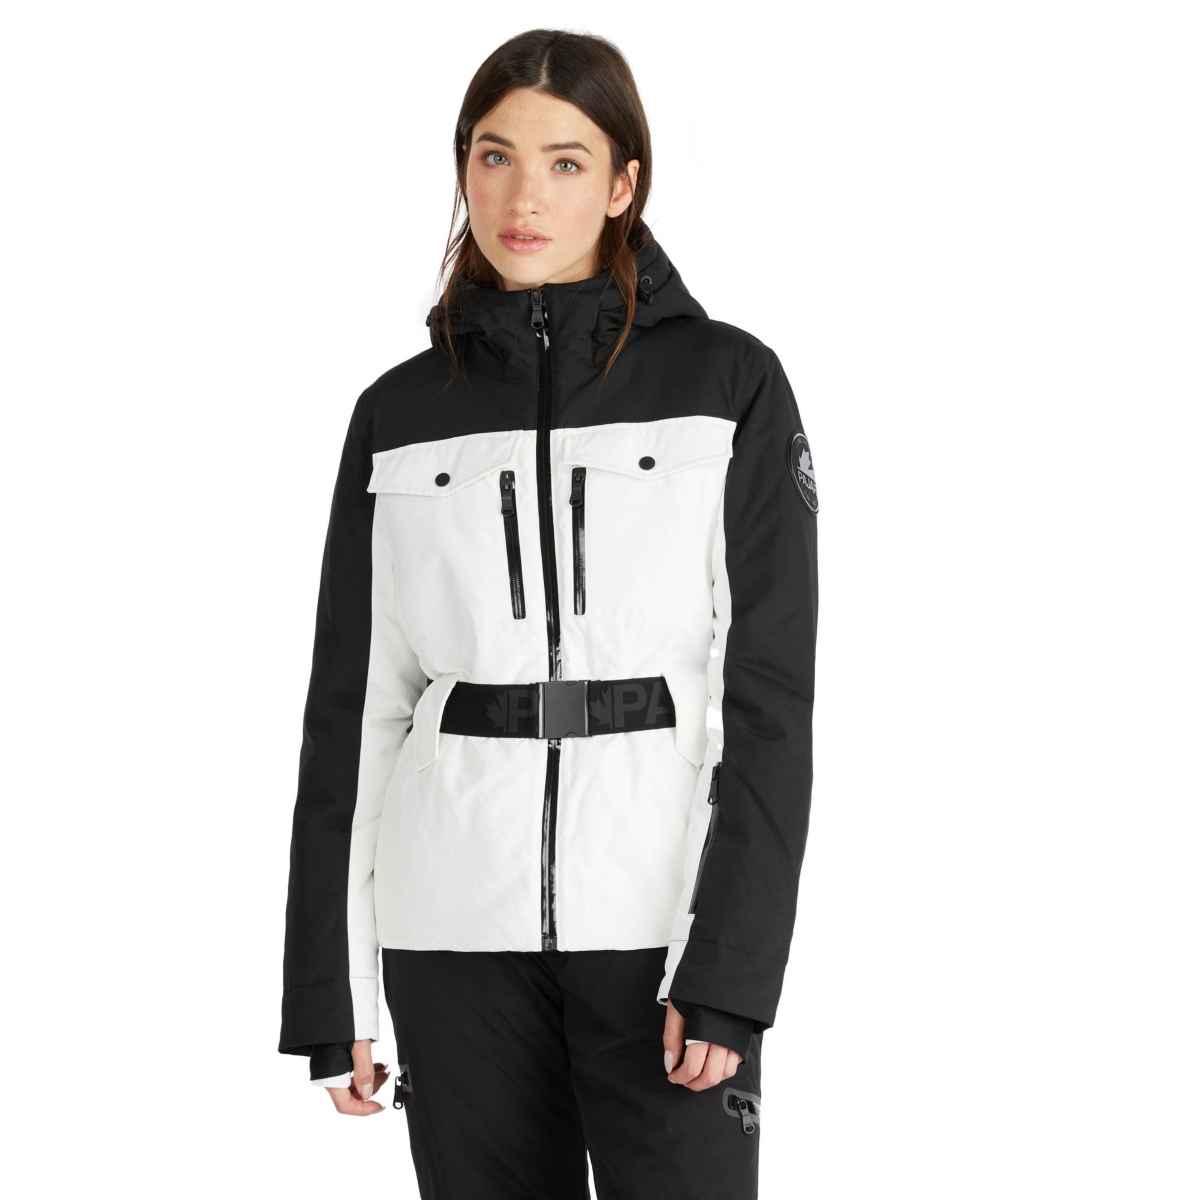 Women's Gabbi Ladies Belted Ski Jacket with Fixed Hood - White op